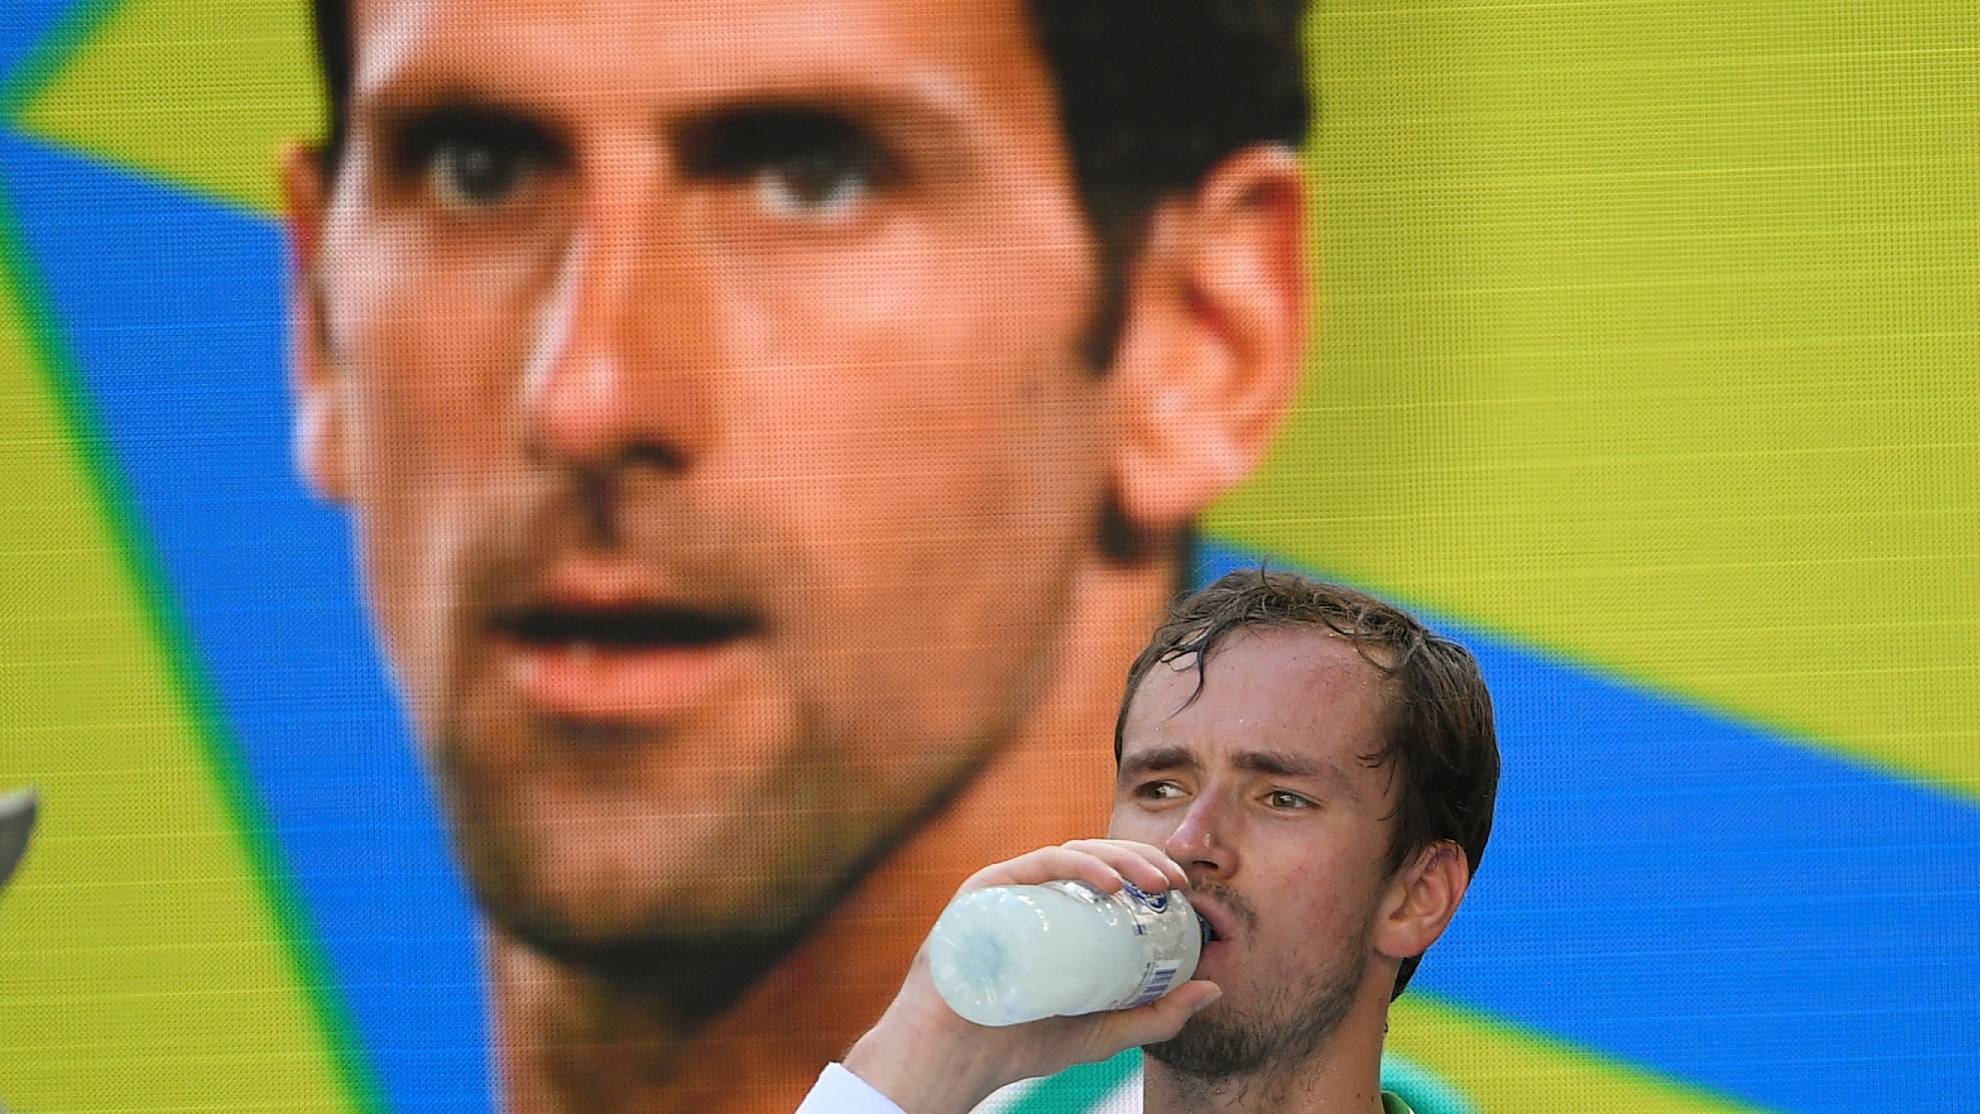 Daniil Medvedev of Russia takes a drink during a break in his third round match against Botic van de Zandschulp.